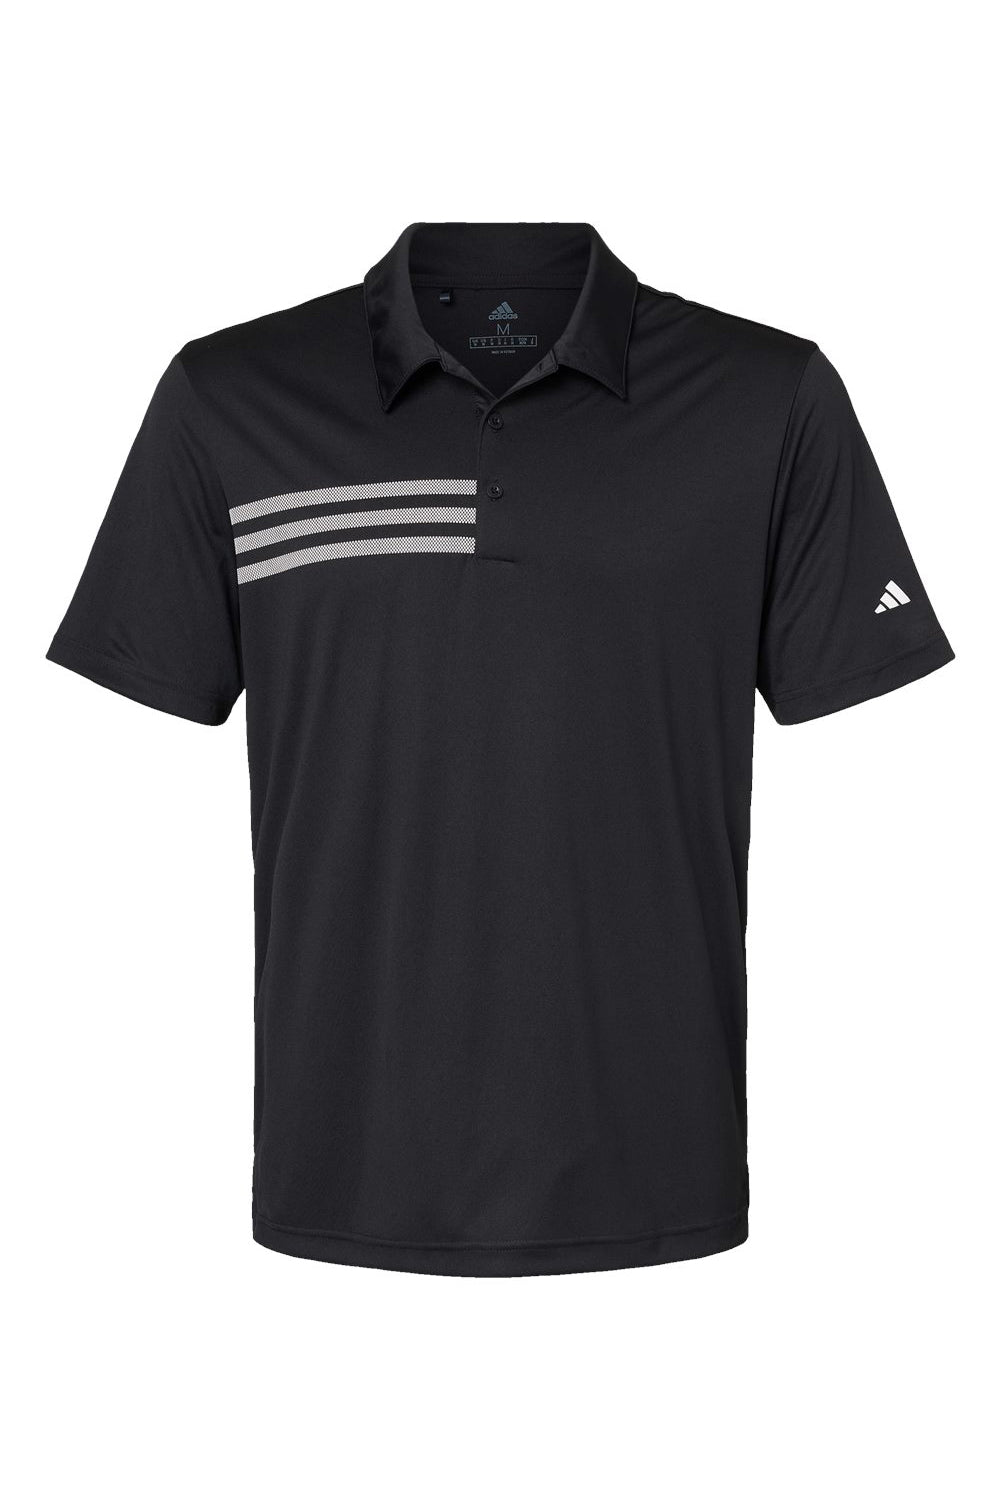 Adidas A324 Mens 3 Stripes Short Sleeve Polo Shirt Black/White Flat Front